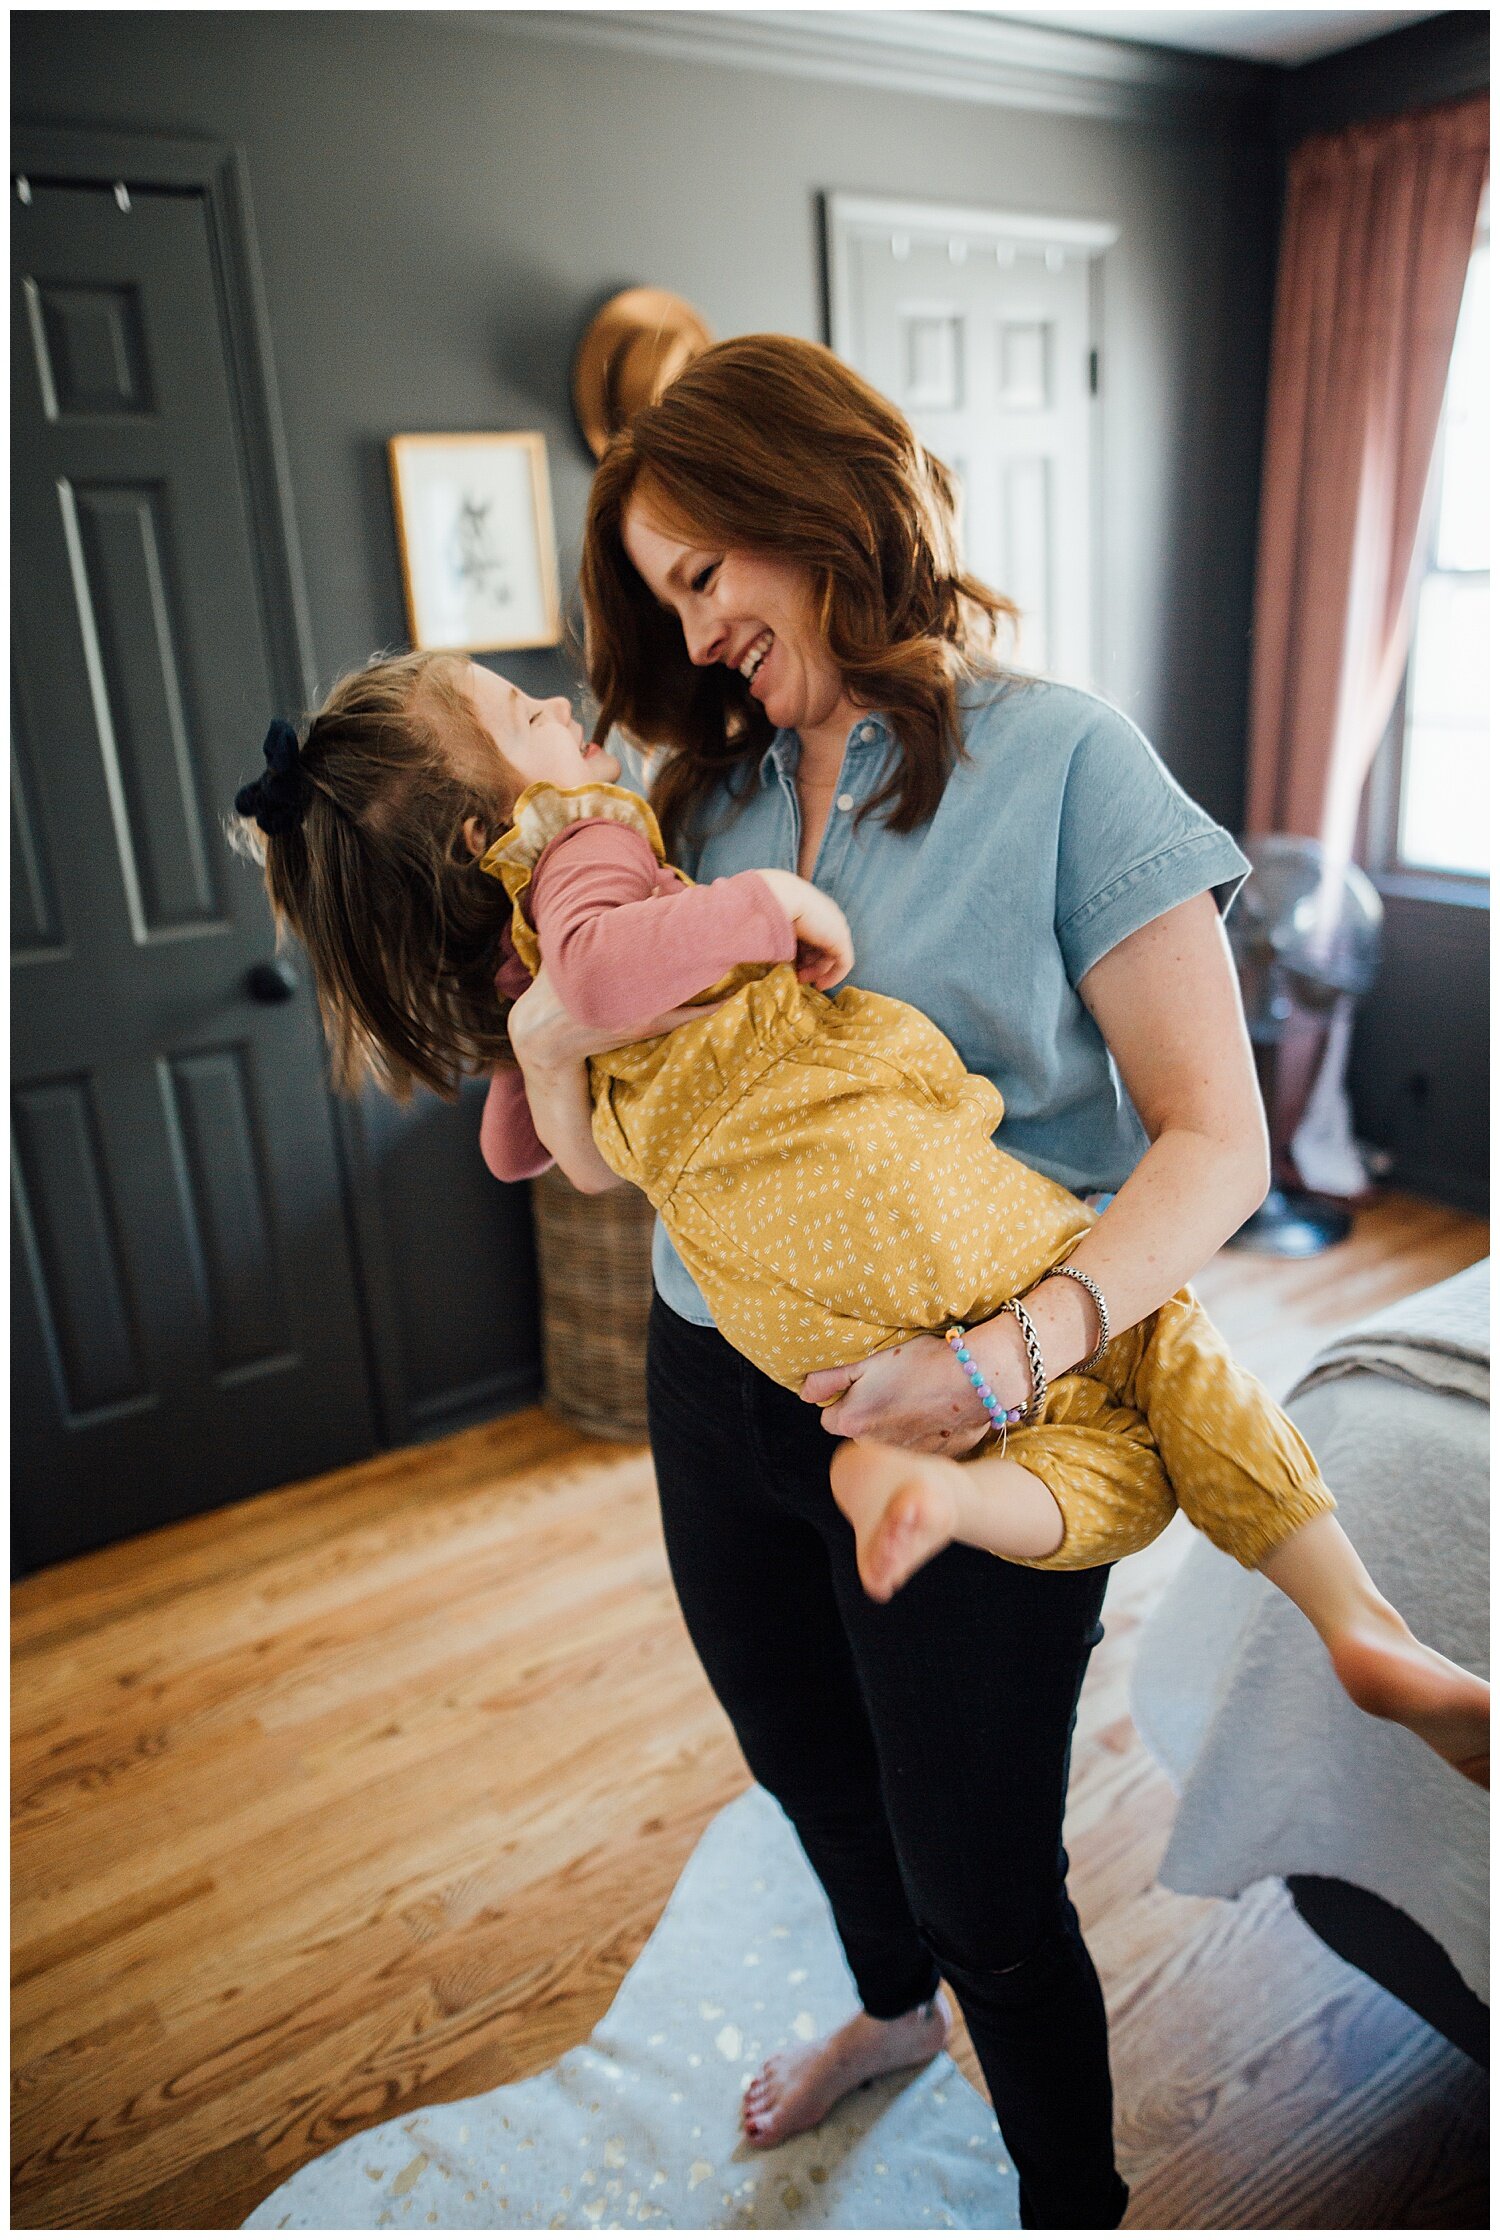 Indiana newborn photographer | motherhood | motherhood photography | home photography sessions | Kelly Lovan photography